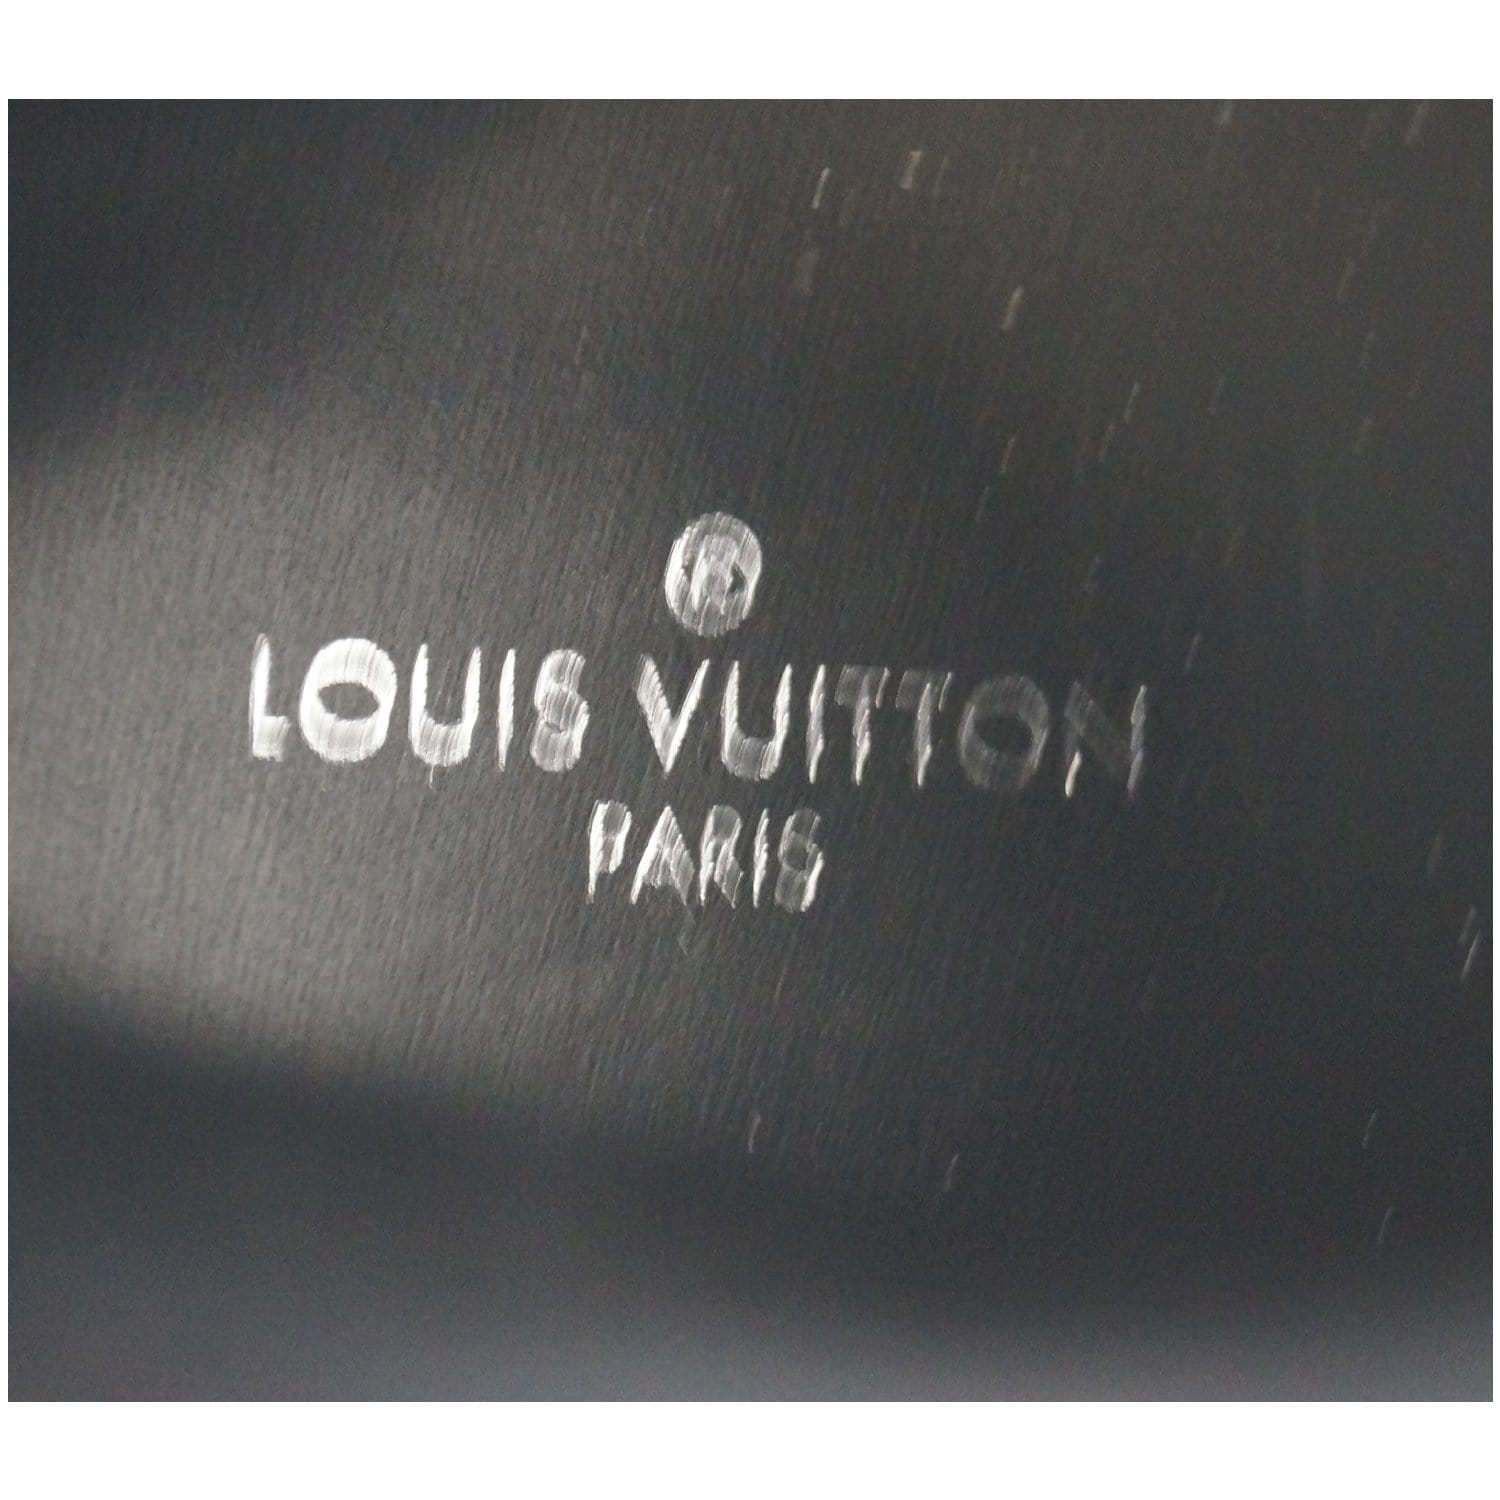 Louis Vuitton Star Trail Monogram Ankle Boots